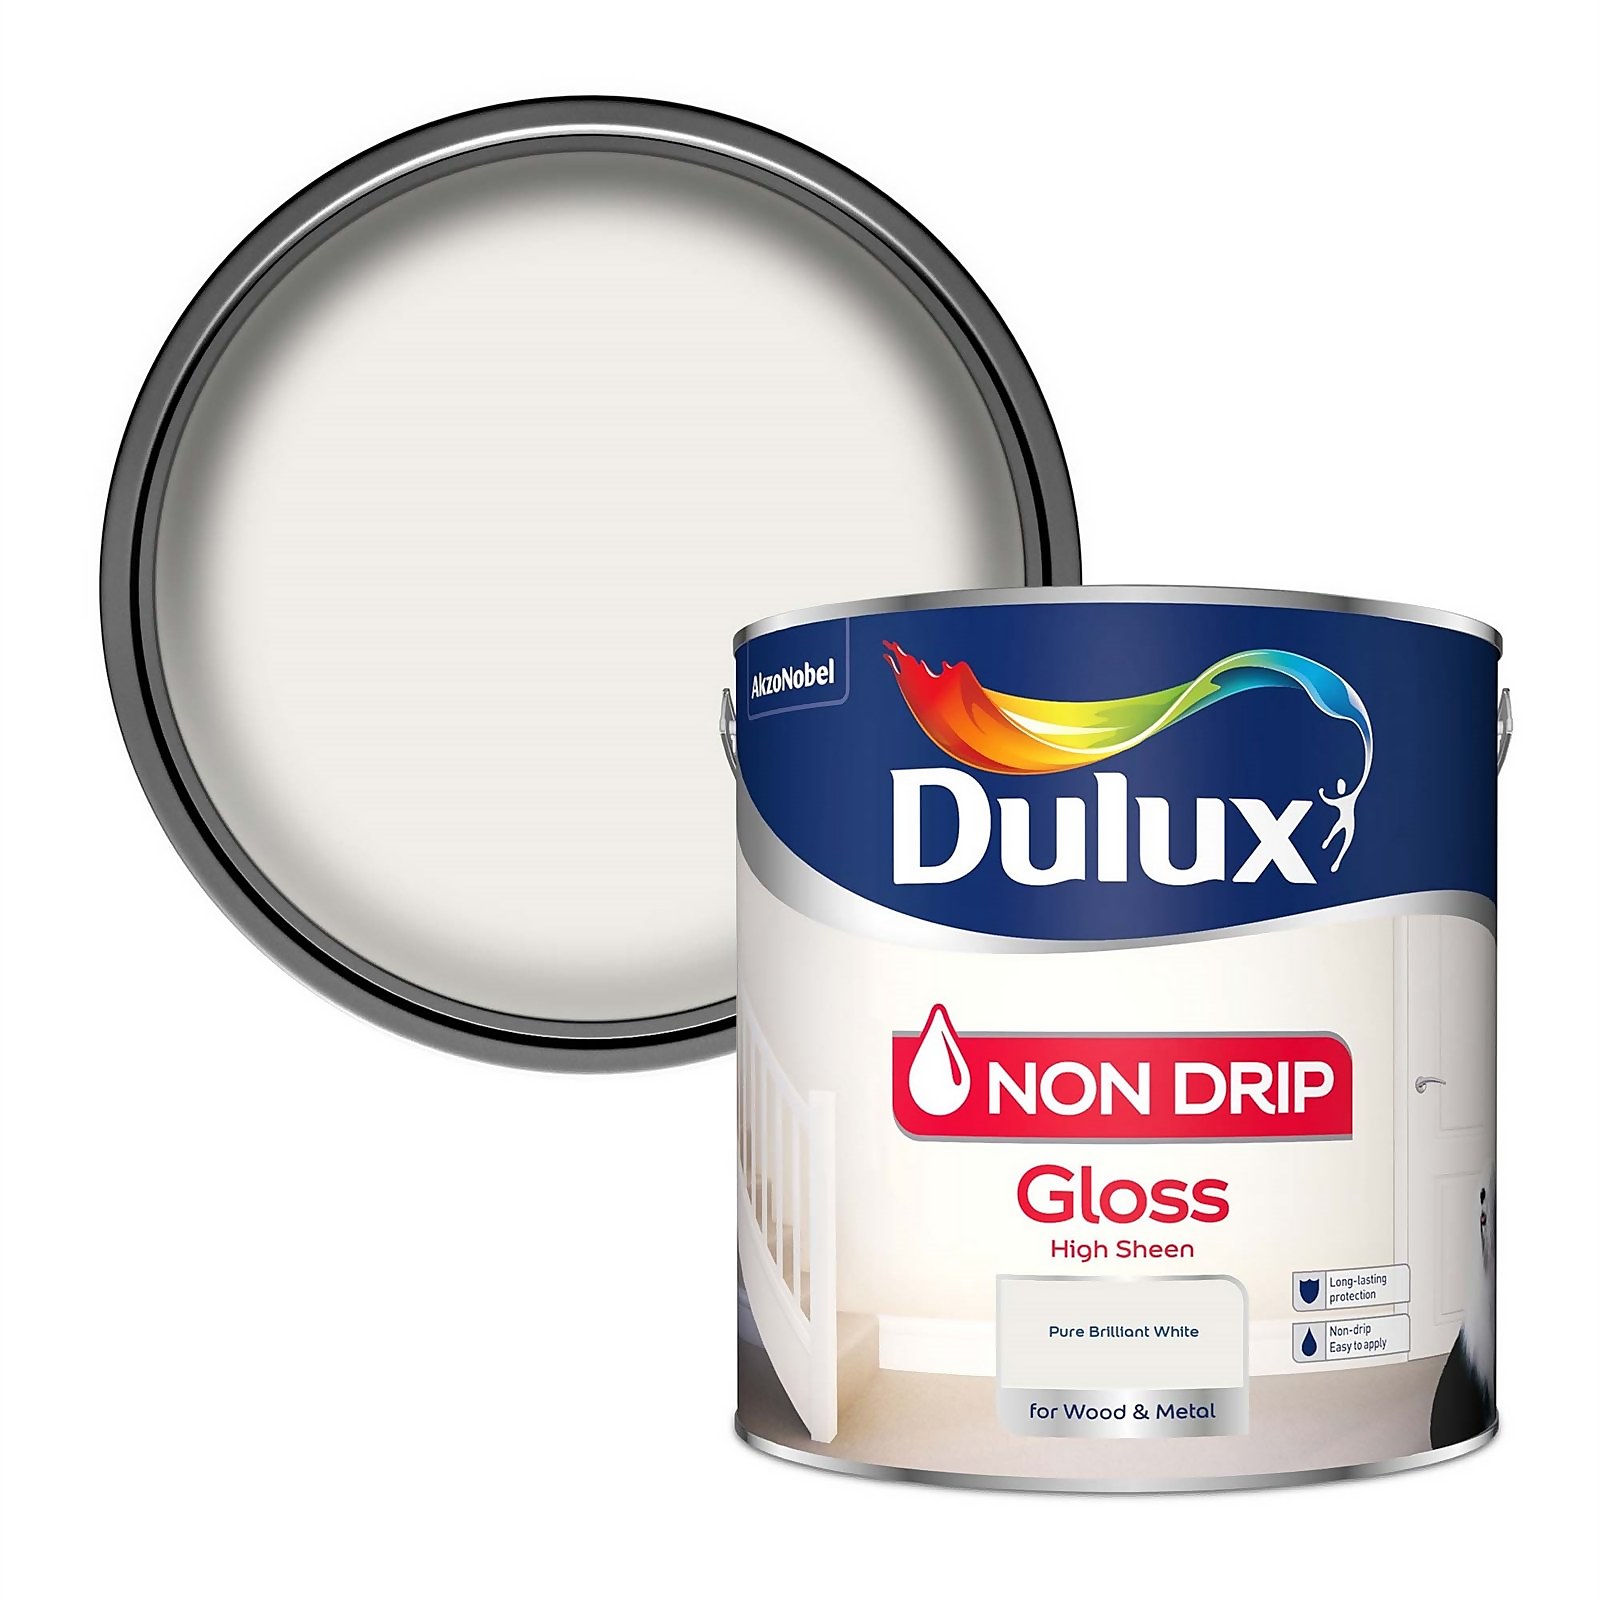 Photo of Dulux Pure Brilliant White Non Drip Gloss Paint - 2.5l